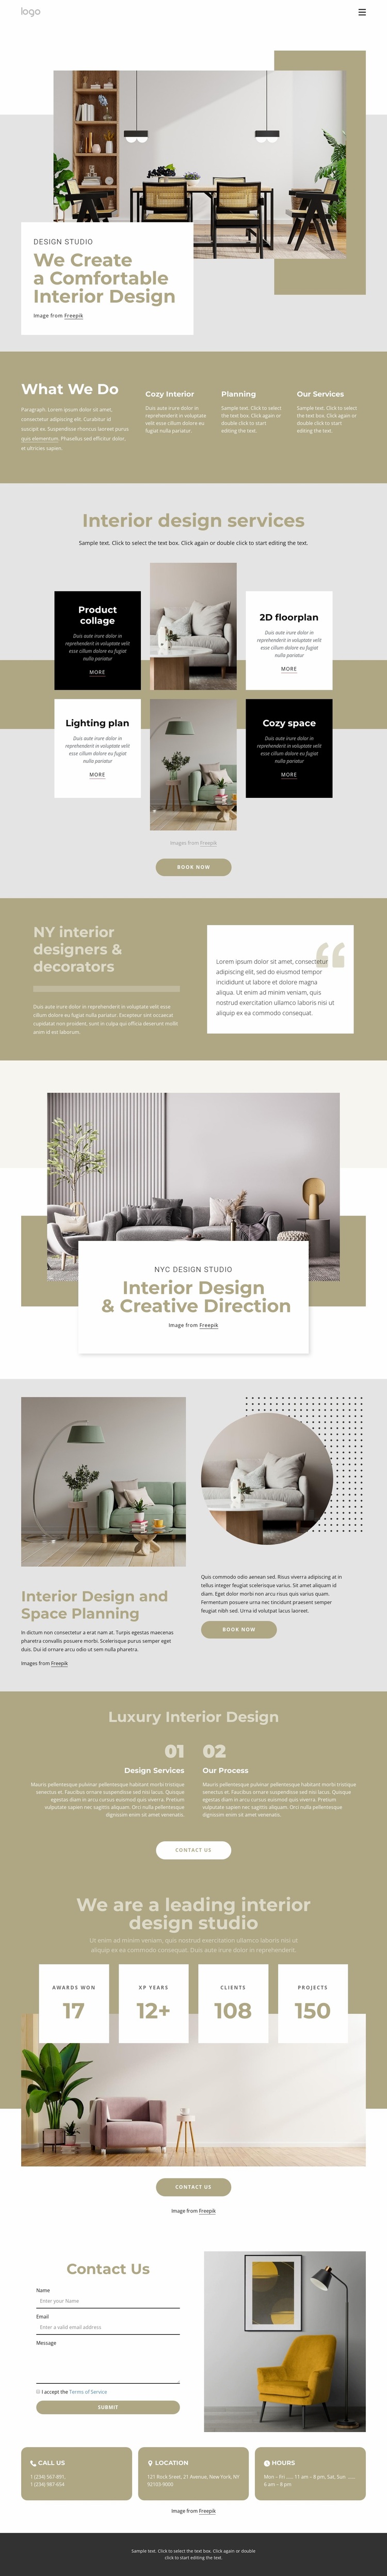 We create a comfortable interiors Website Design